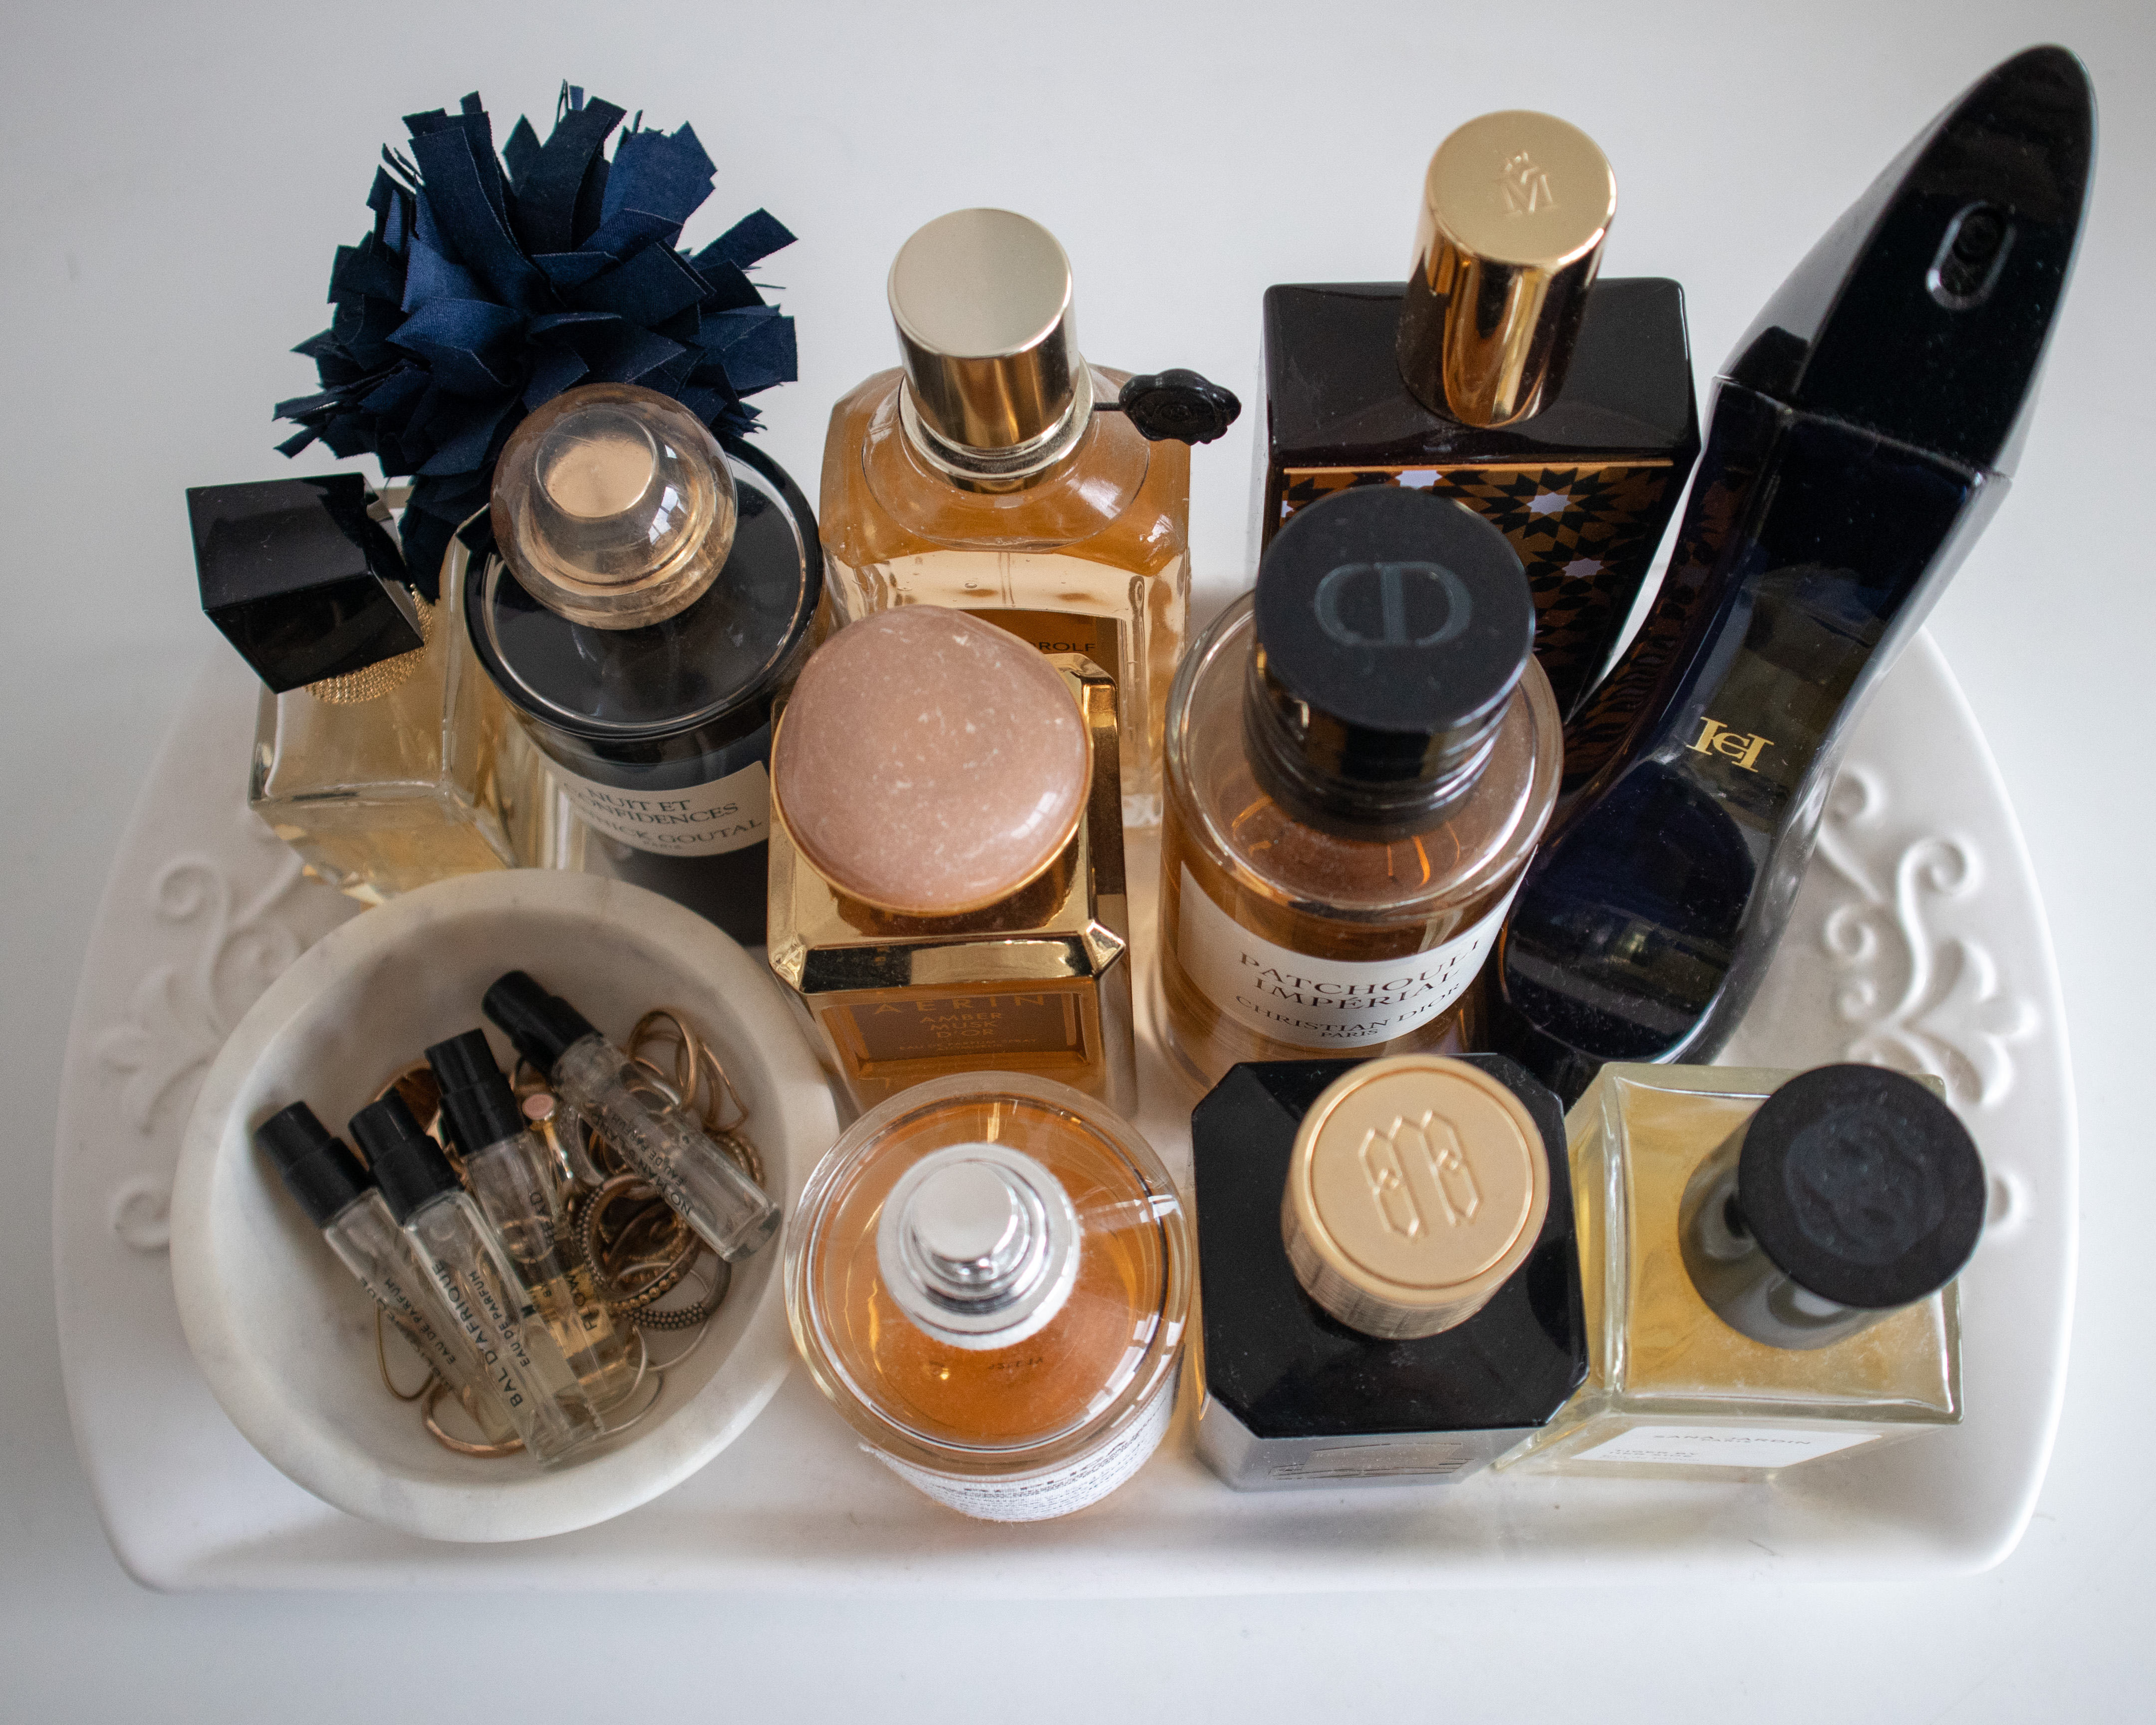 AZARAM: favorite perfumes